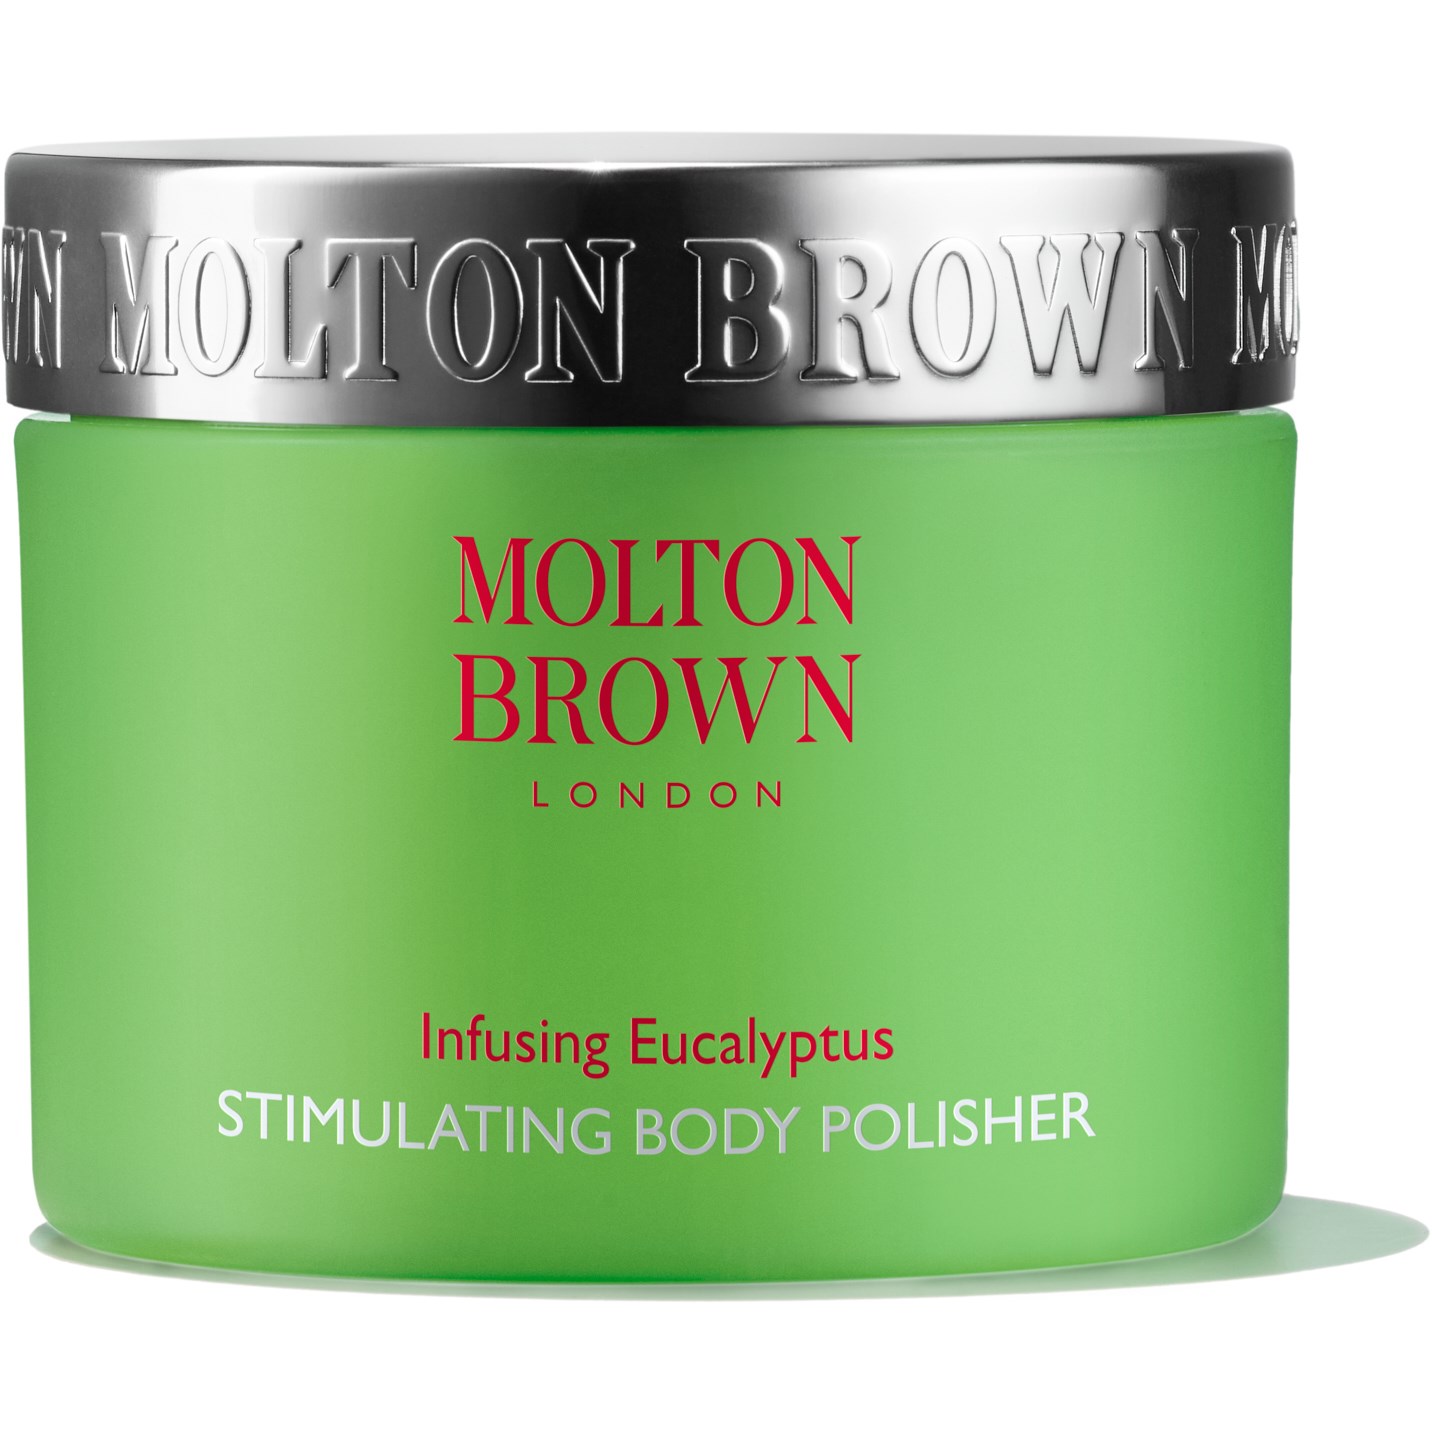 Molton Brown Infusing Eucalyptus Stimulating Body Polisher